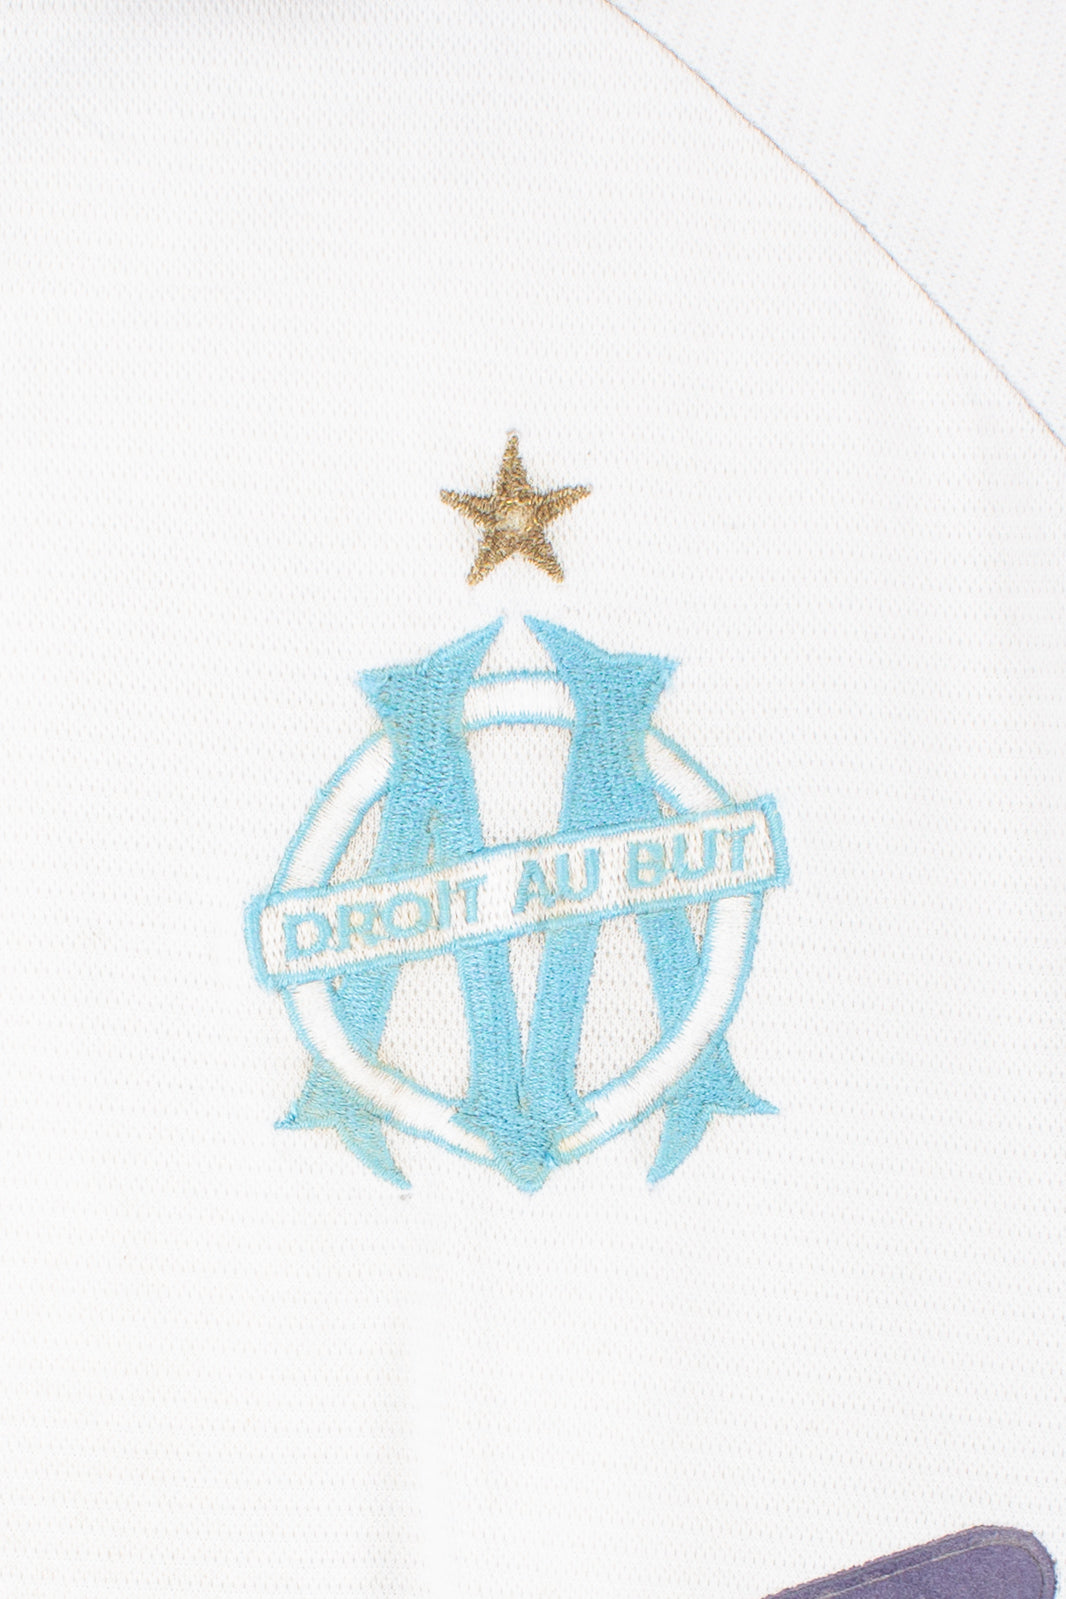 Marseille 1999/00 Home Shirt (Luccin #26) (XL)